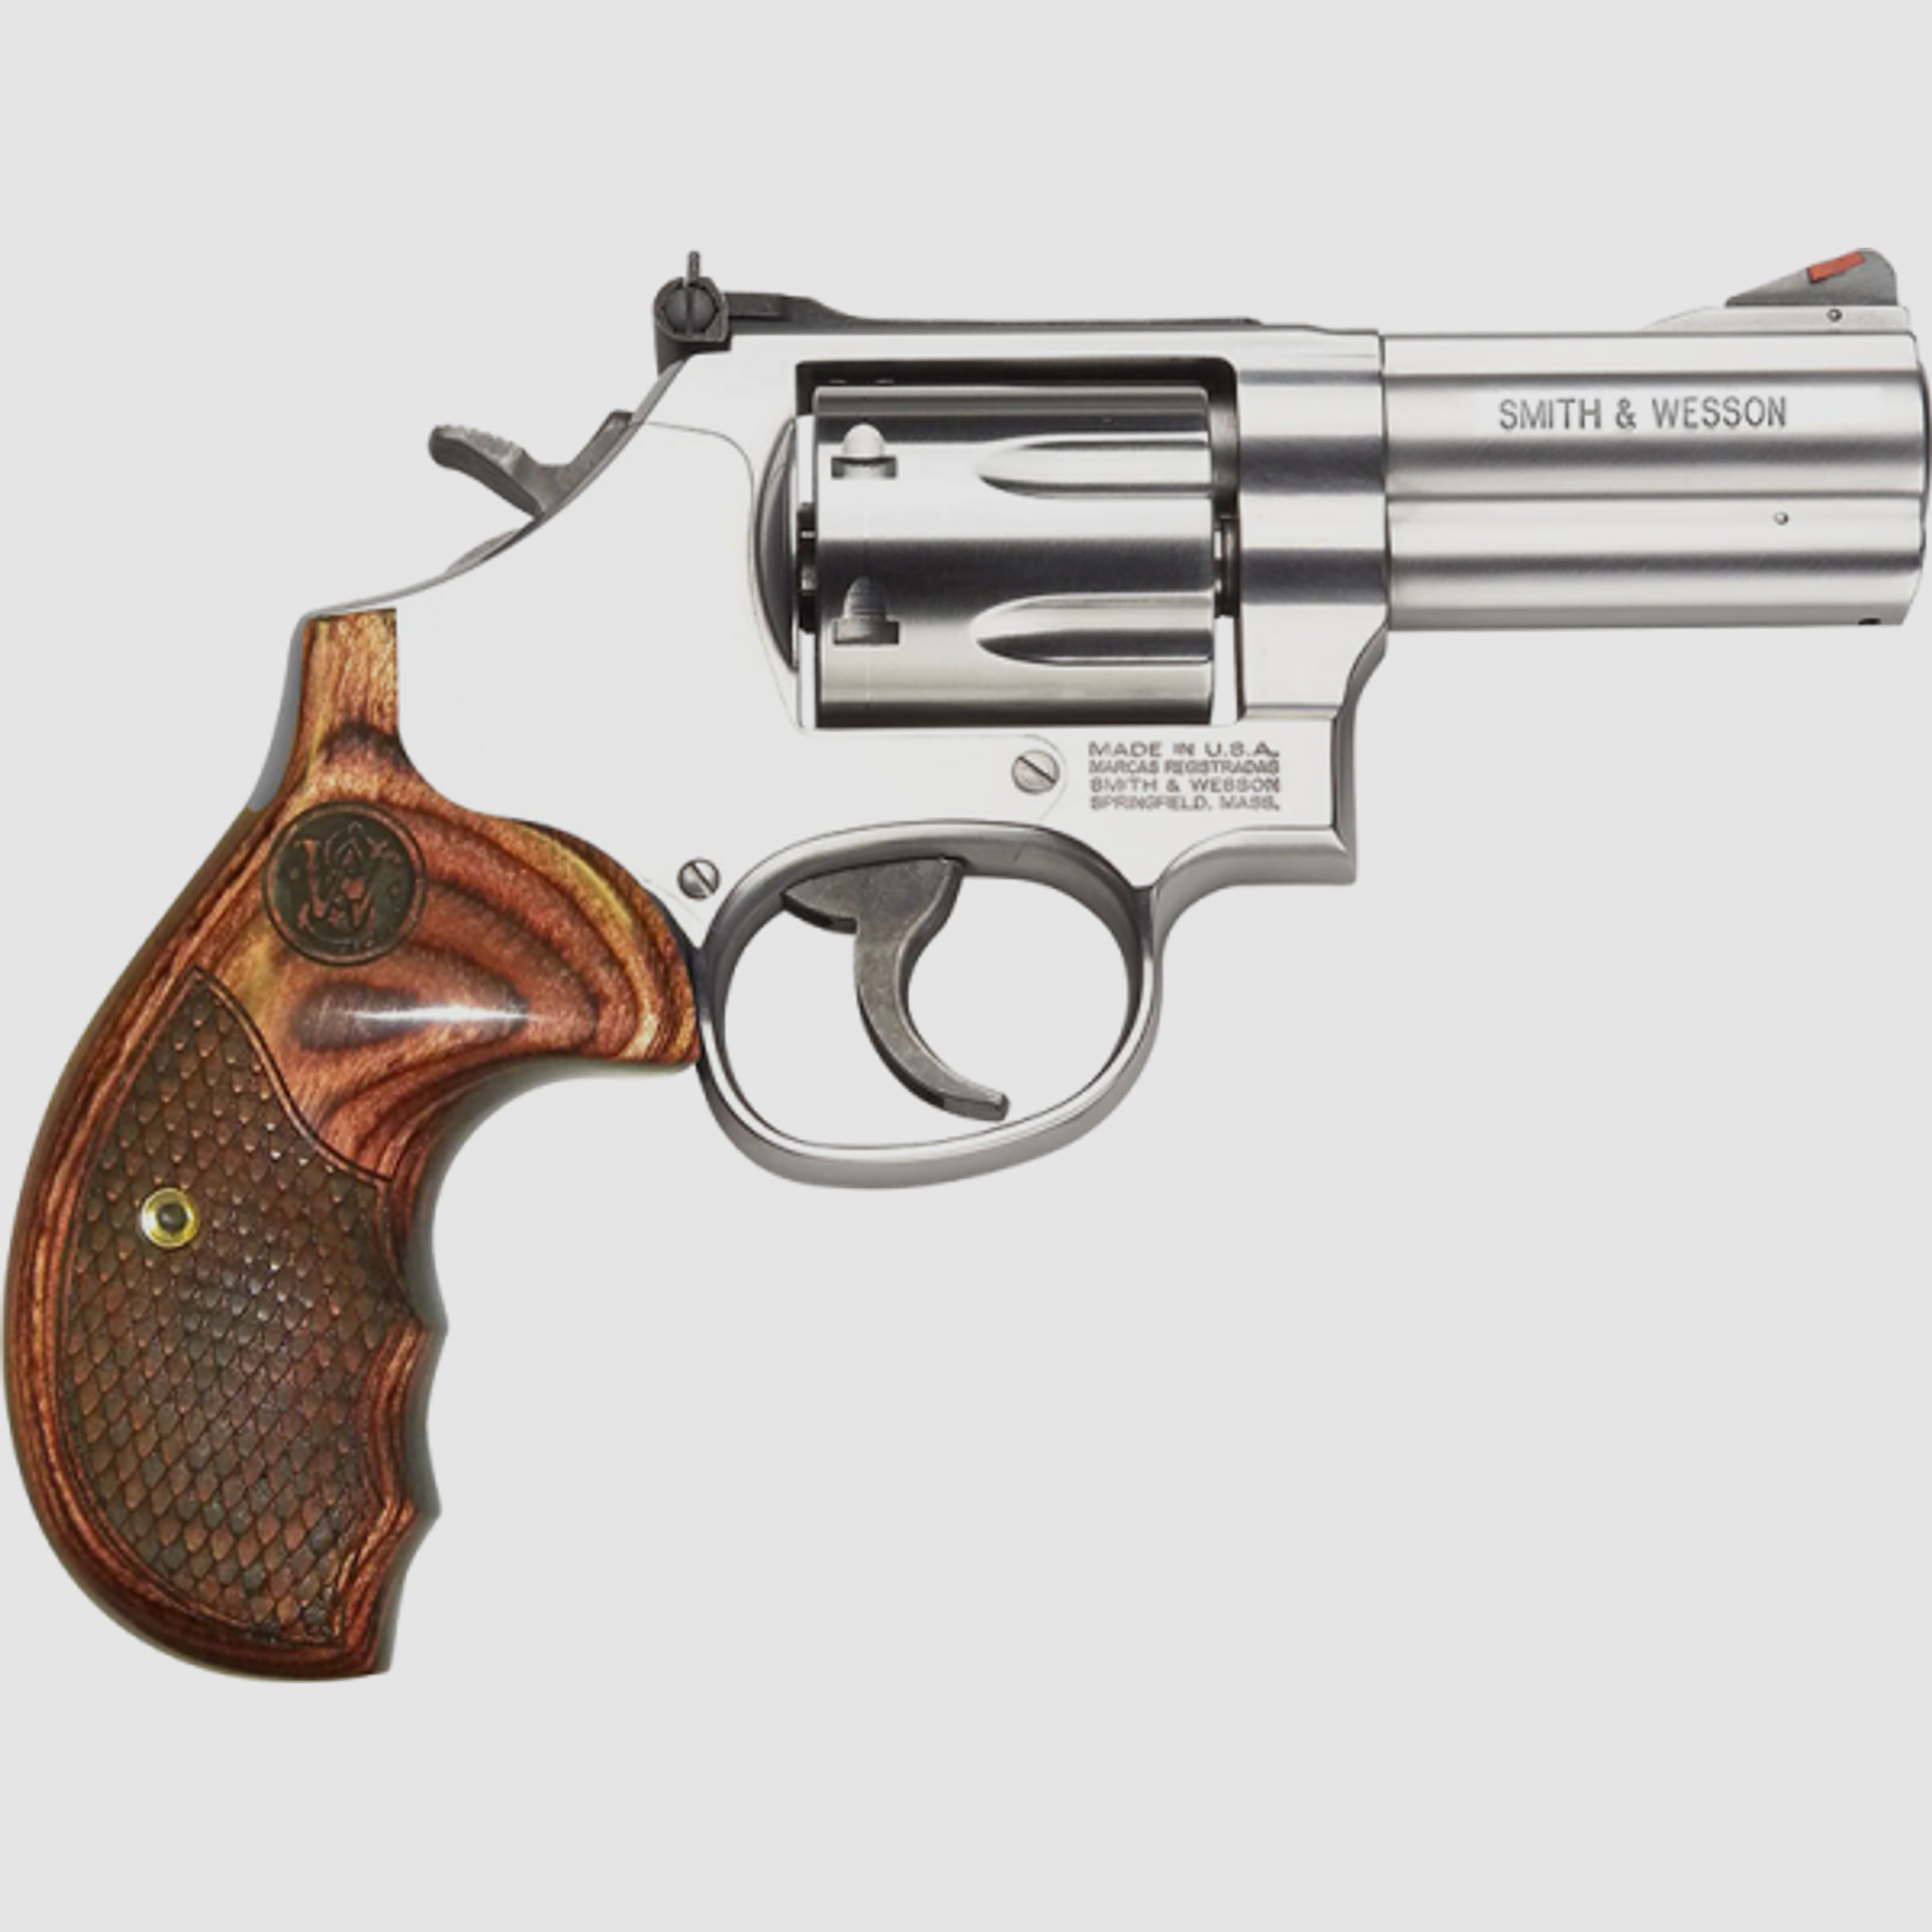 Smith & Wesson Model 686 Plus Deluxe Revolver